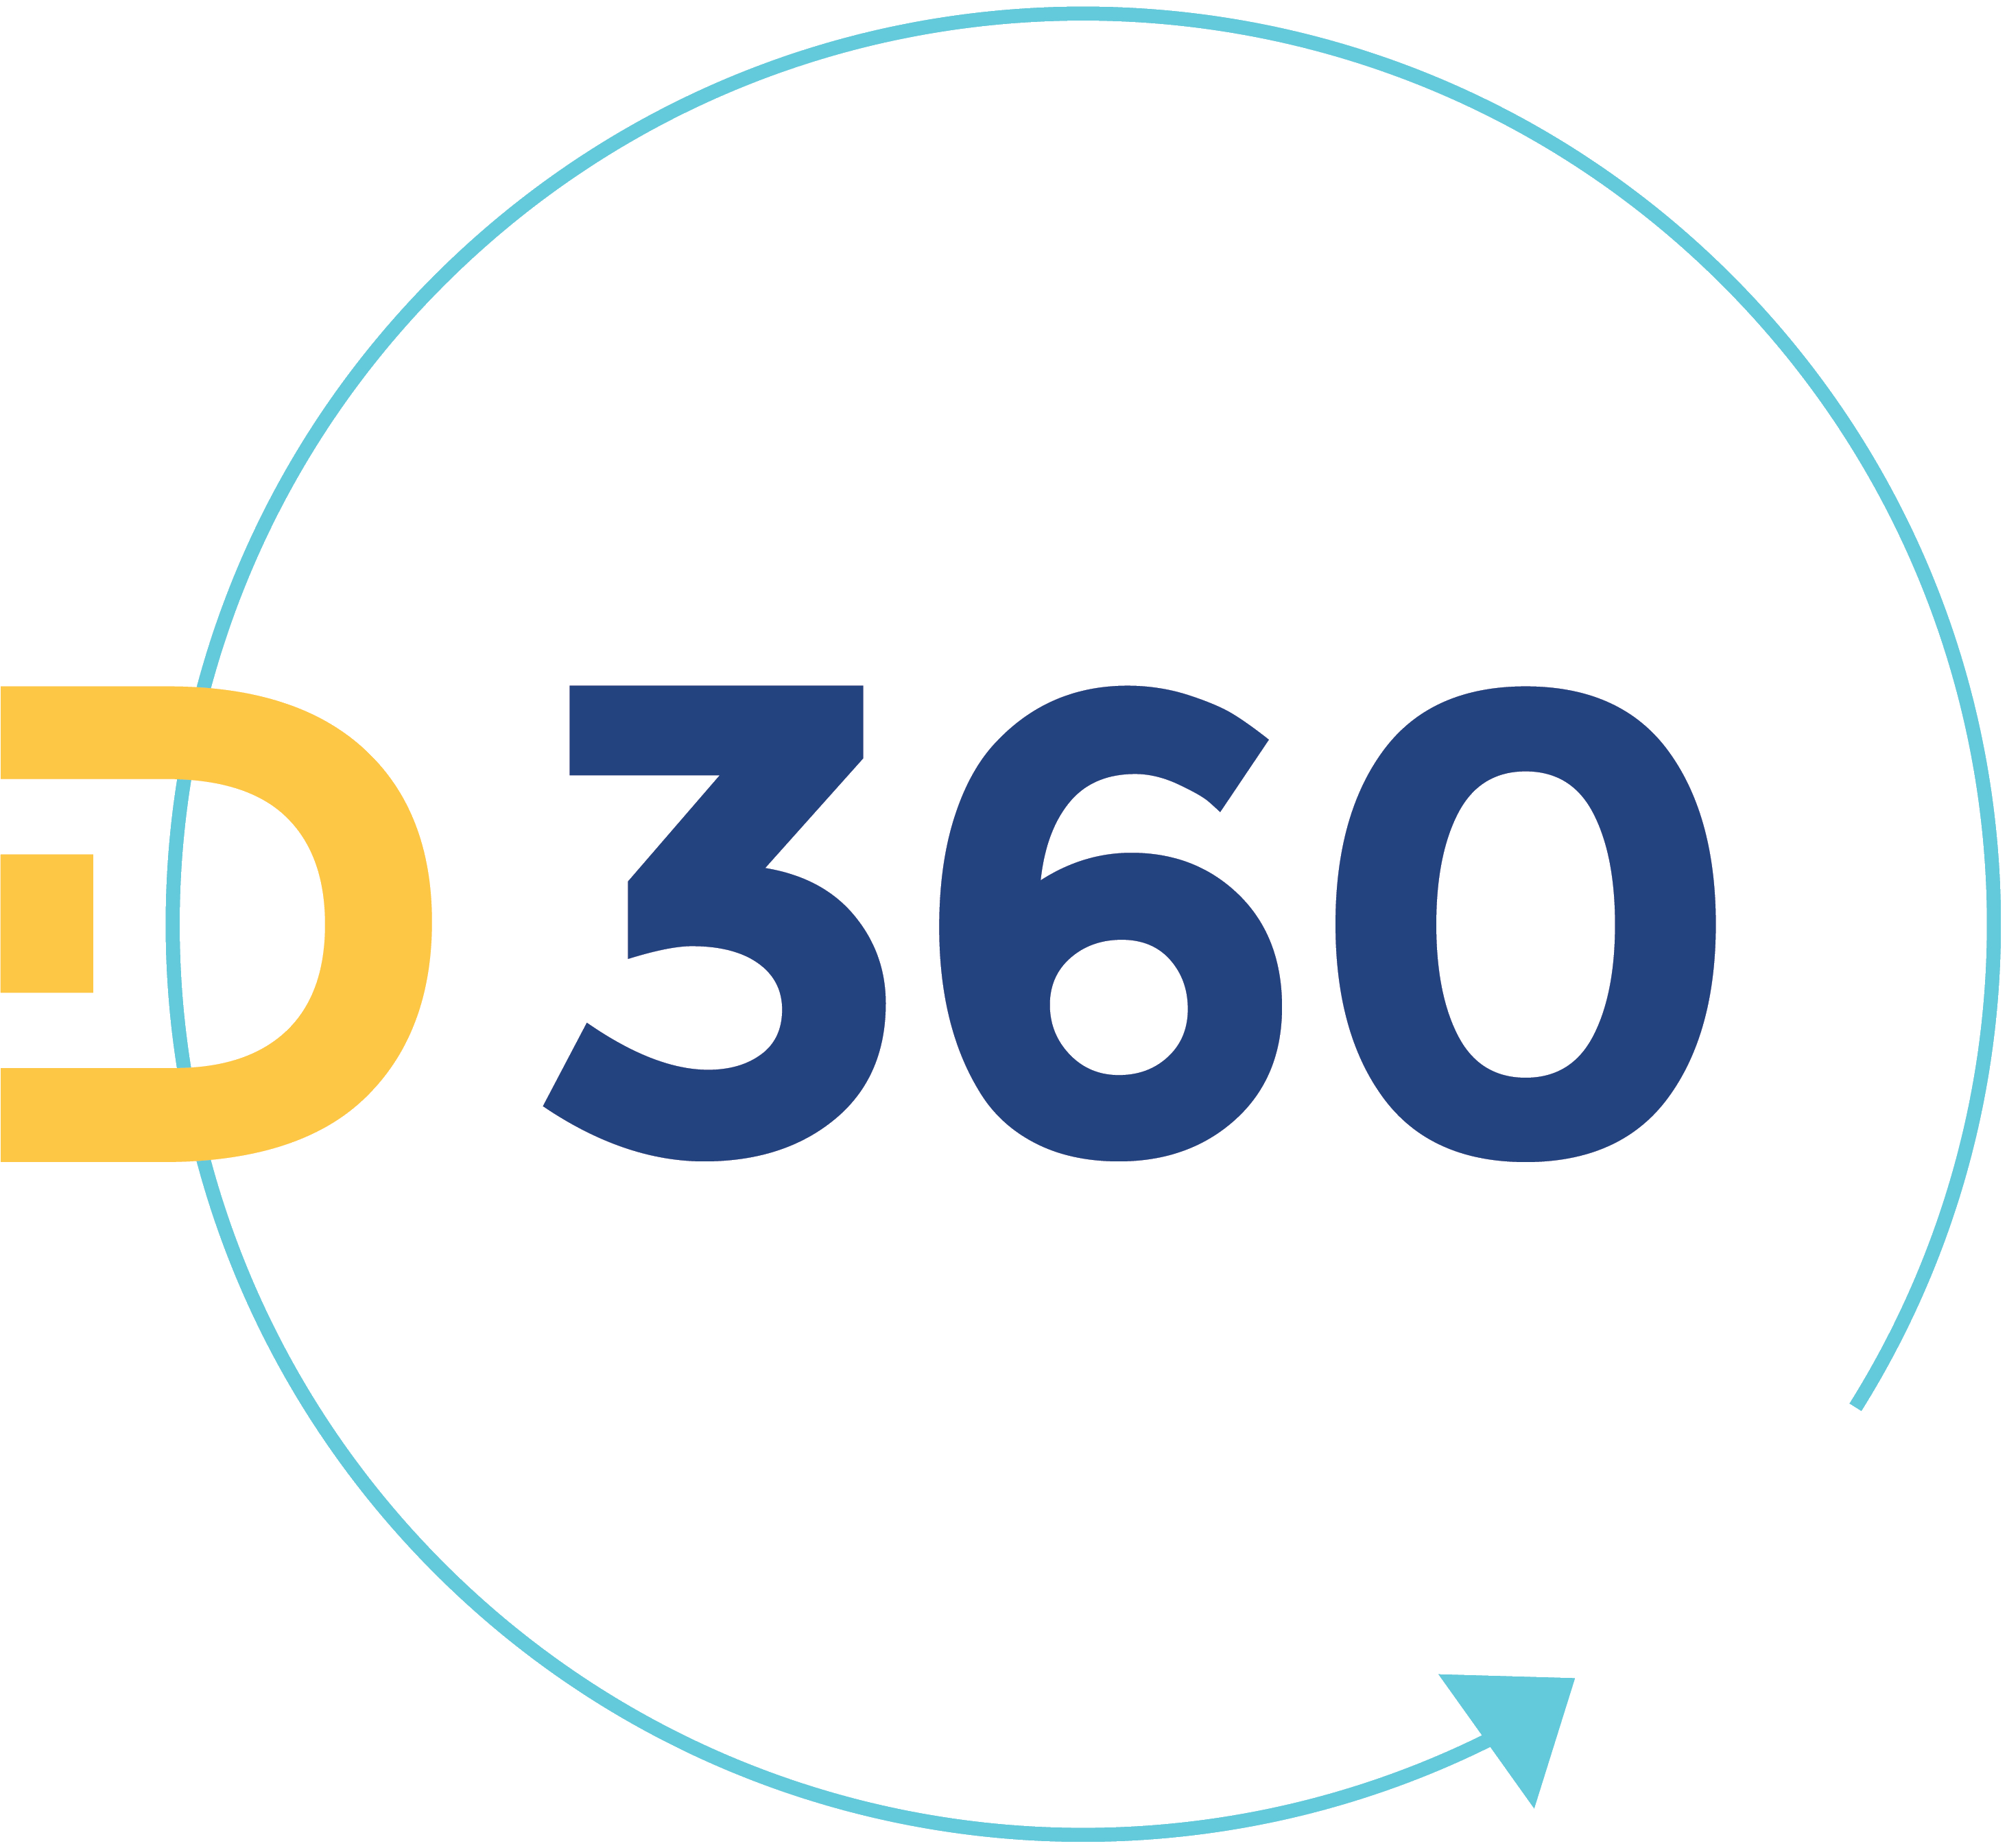 D360 logo transparent